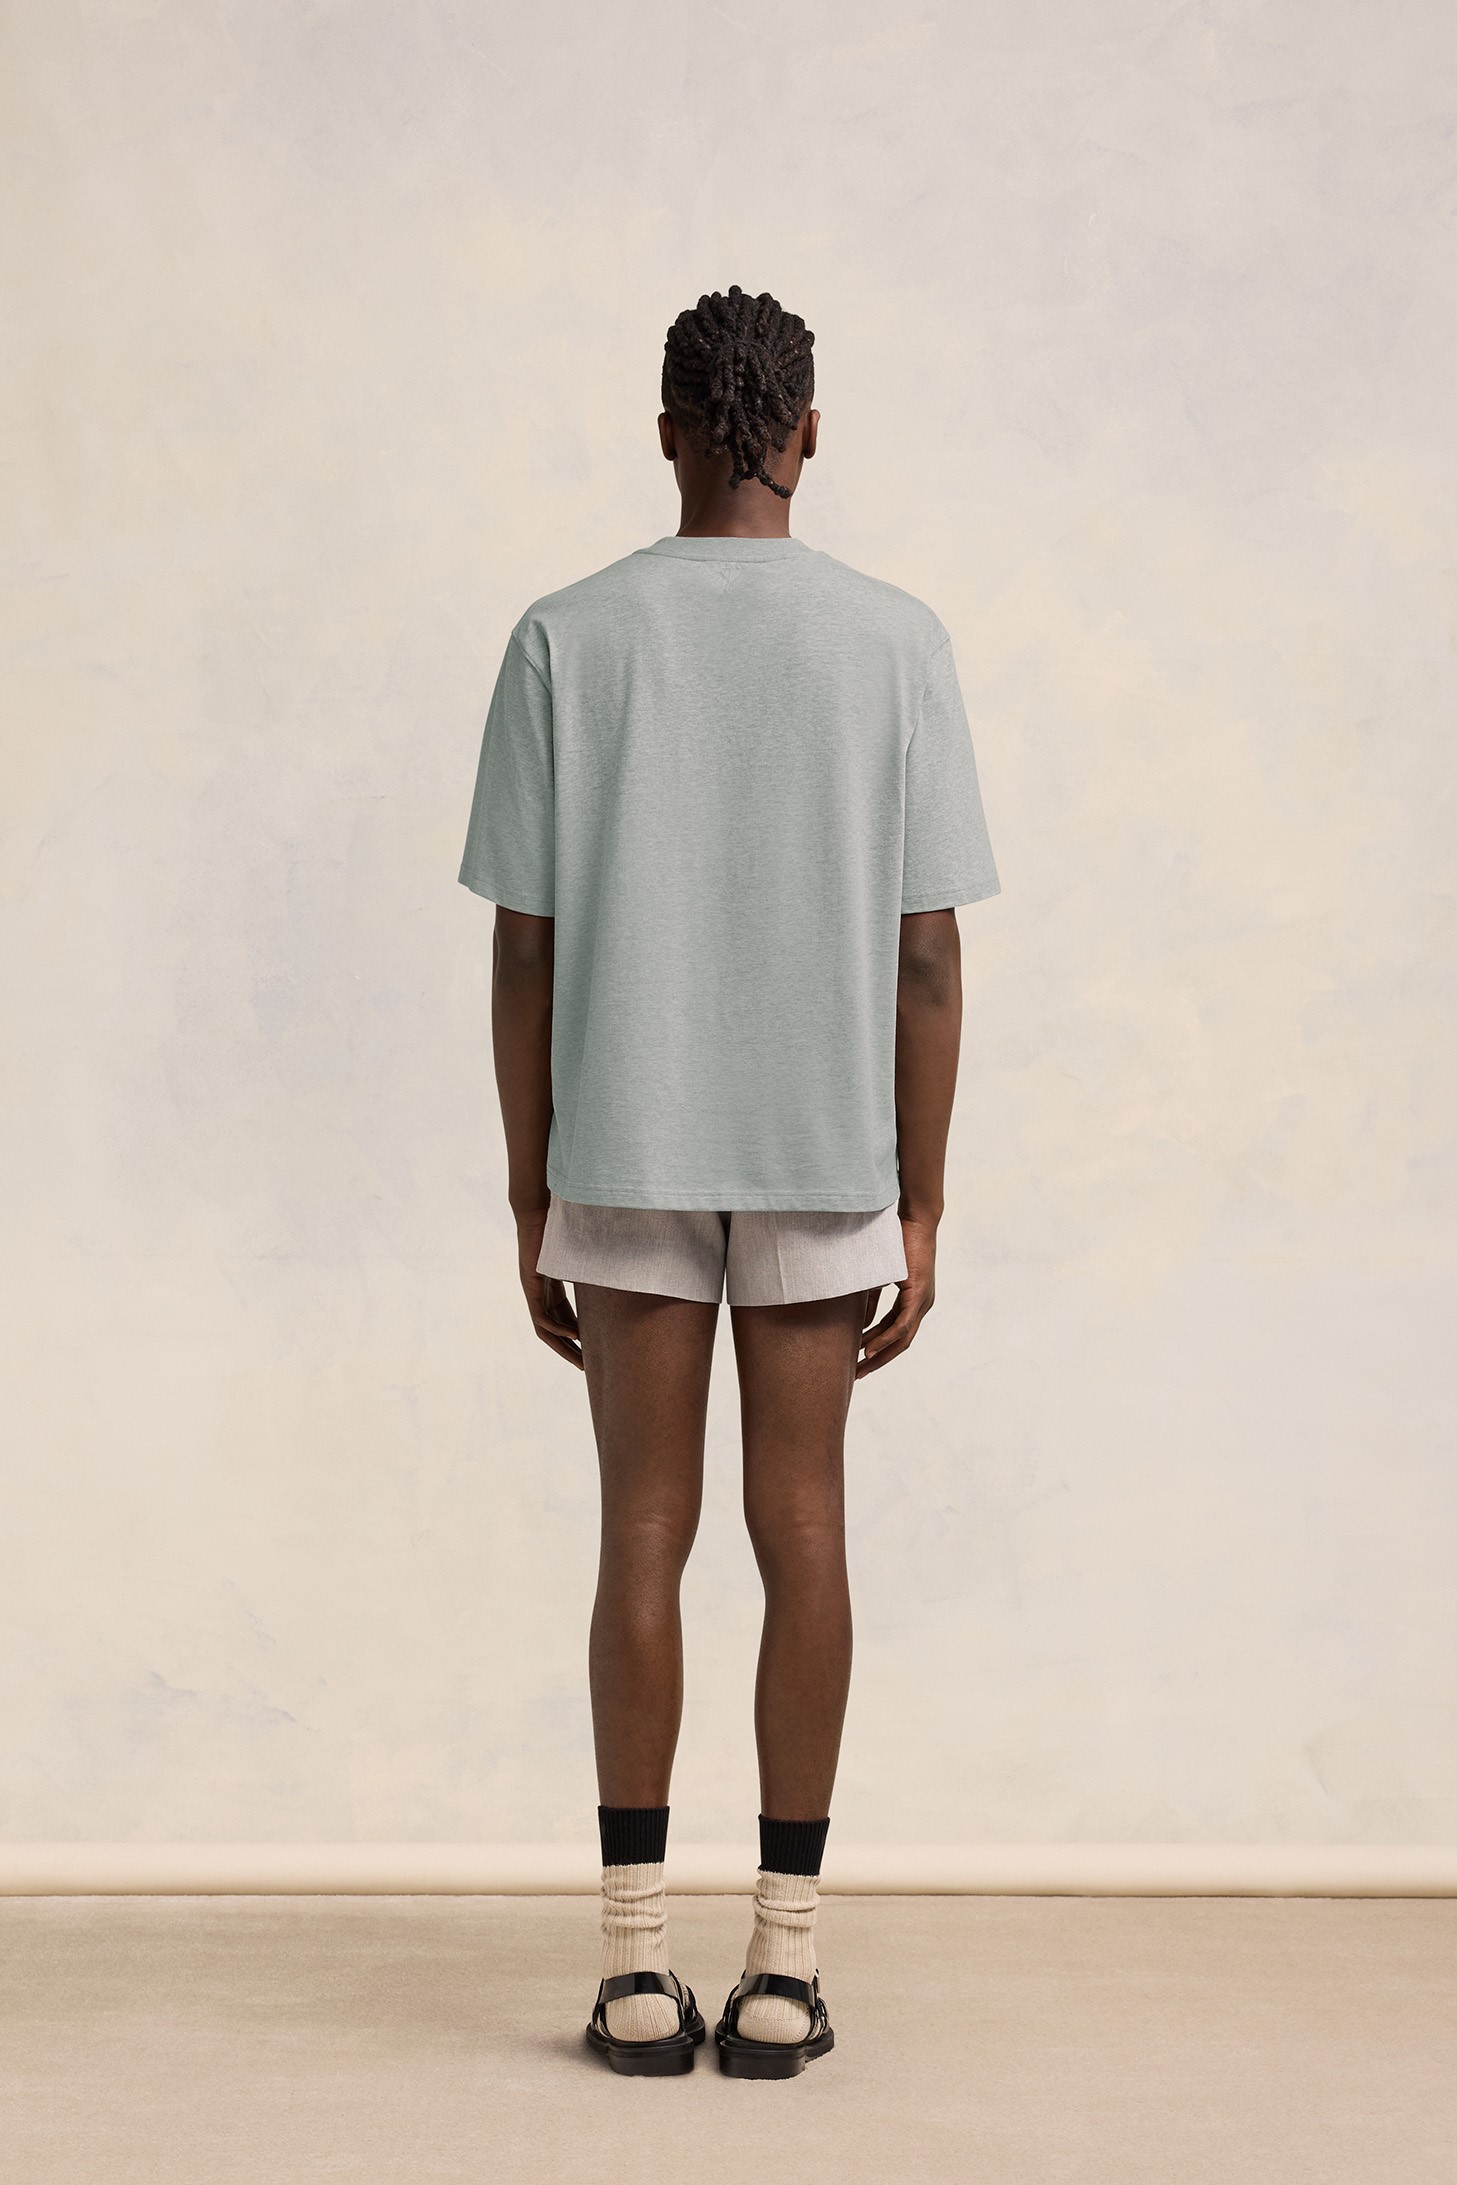 AMI PARIS Alexandre Mattuissi Boxy Fit T-Shirt in Heather Ash Grey S